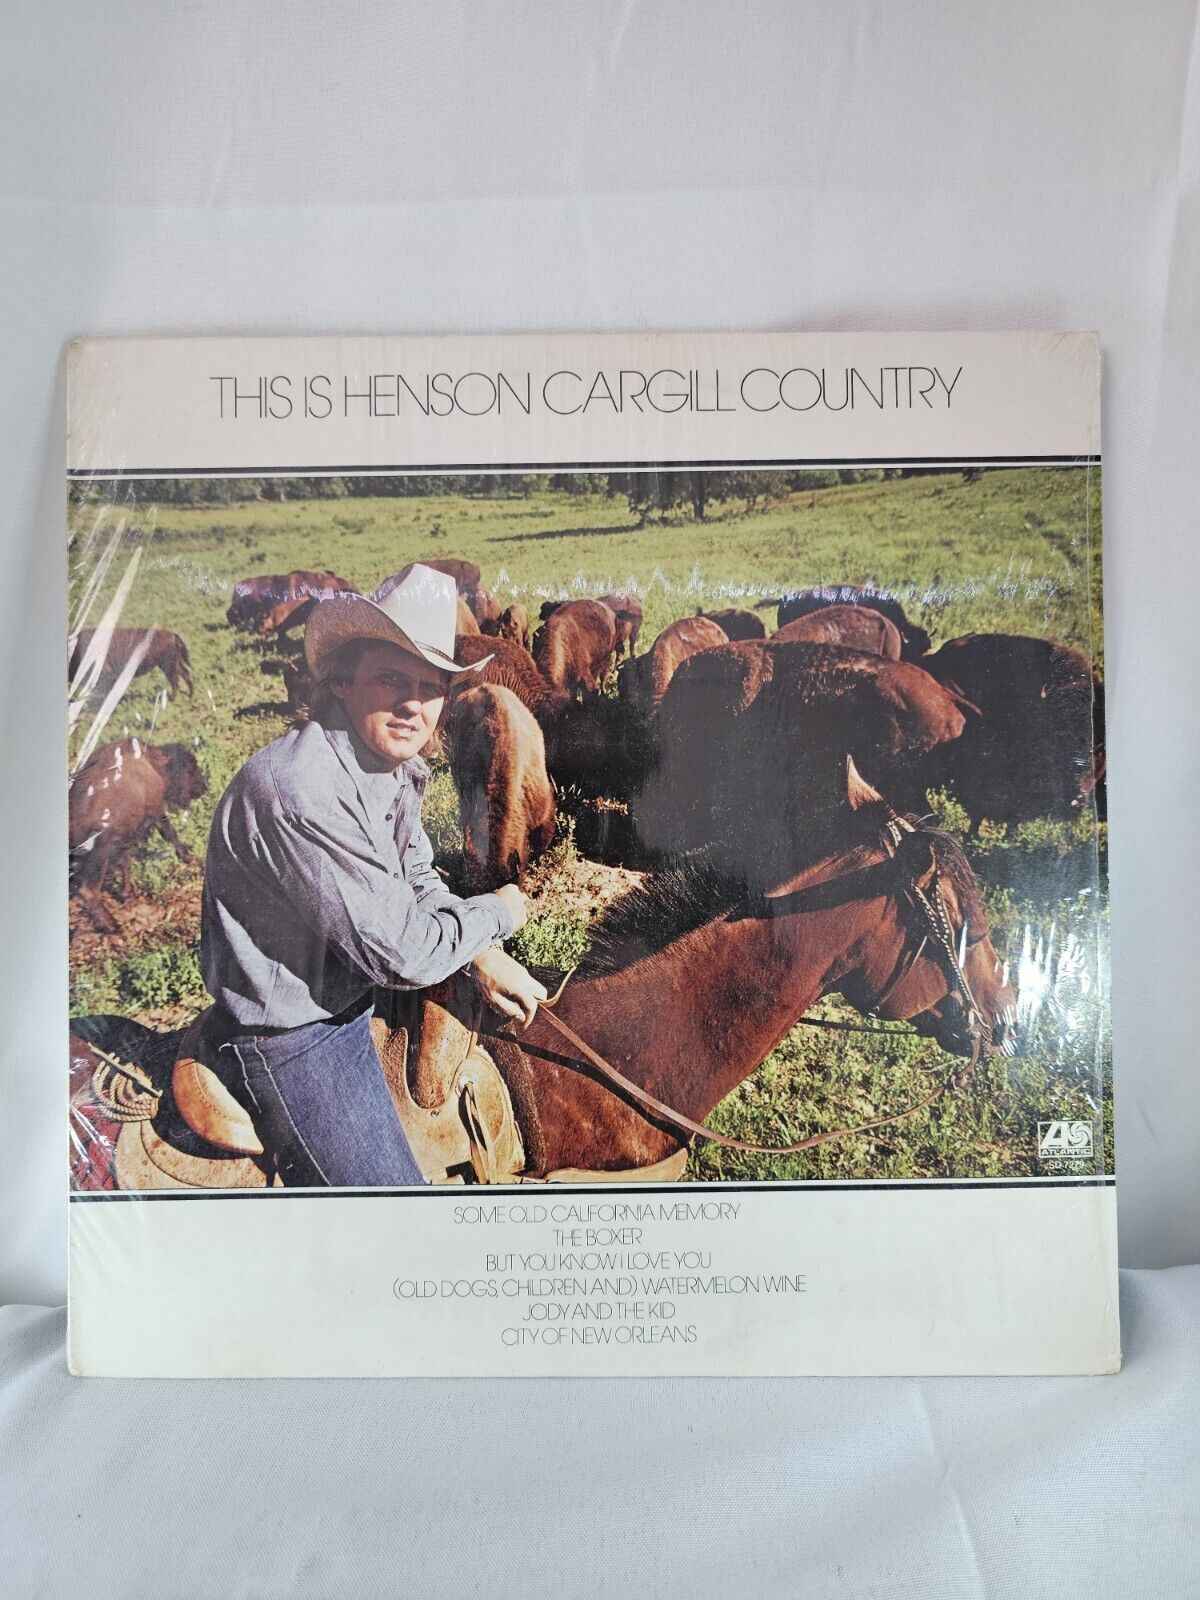 Henson Cargill: This Is Henson Cargill Country [LP] 1973 Atlantic Records Vinyl